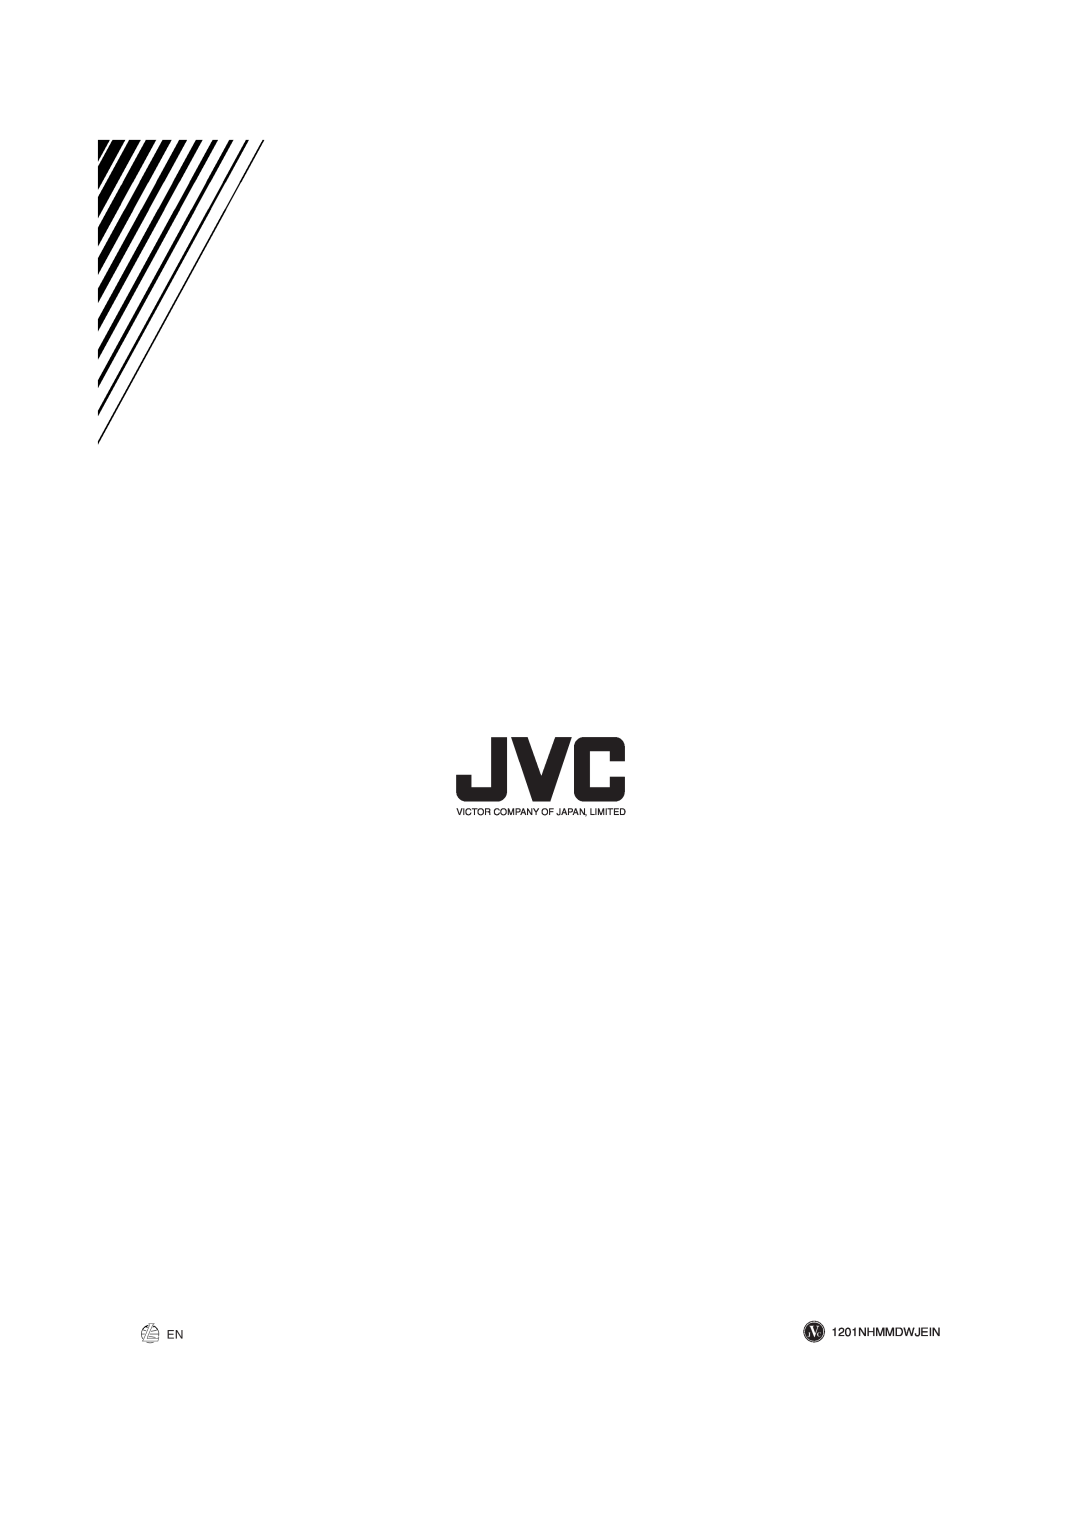 JVC RX-5020VBK, RX-5022VSL manual 1201NHMMDWJEIN, Victor Company Of Japan, Limited 